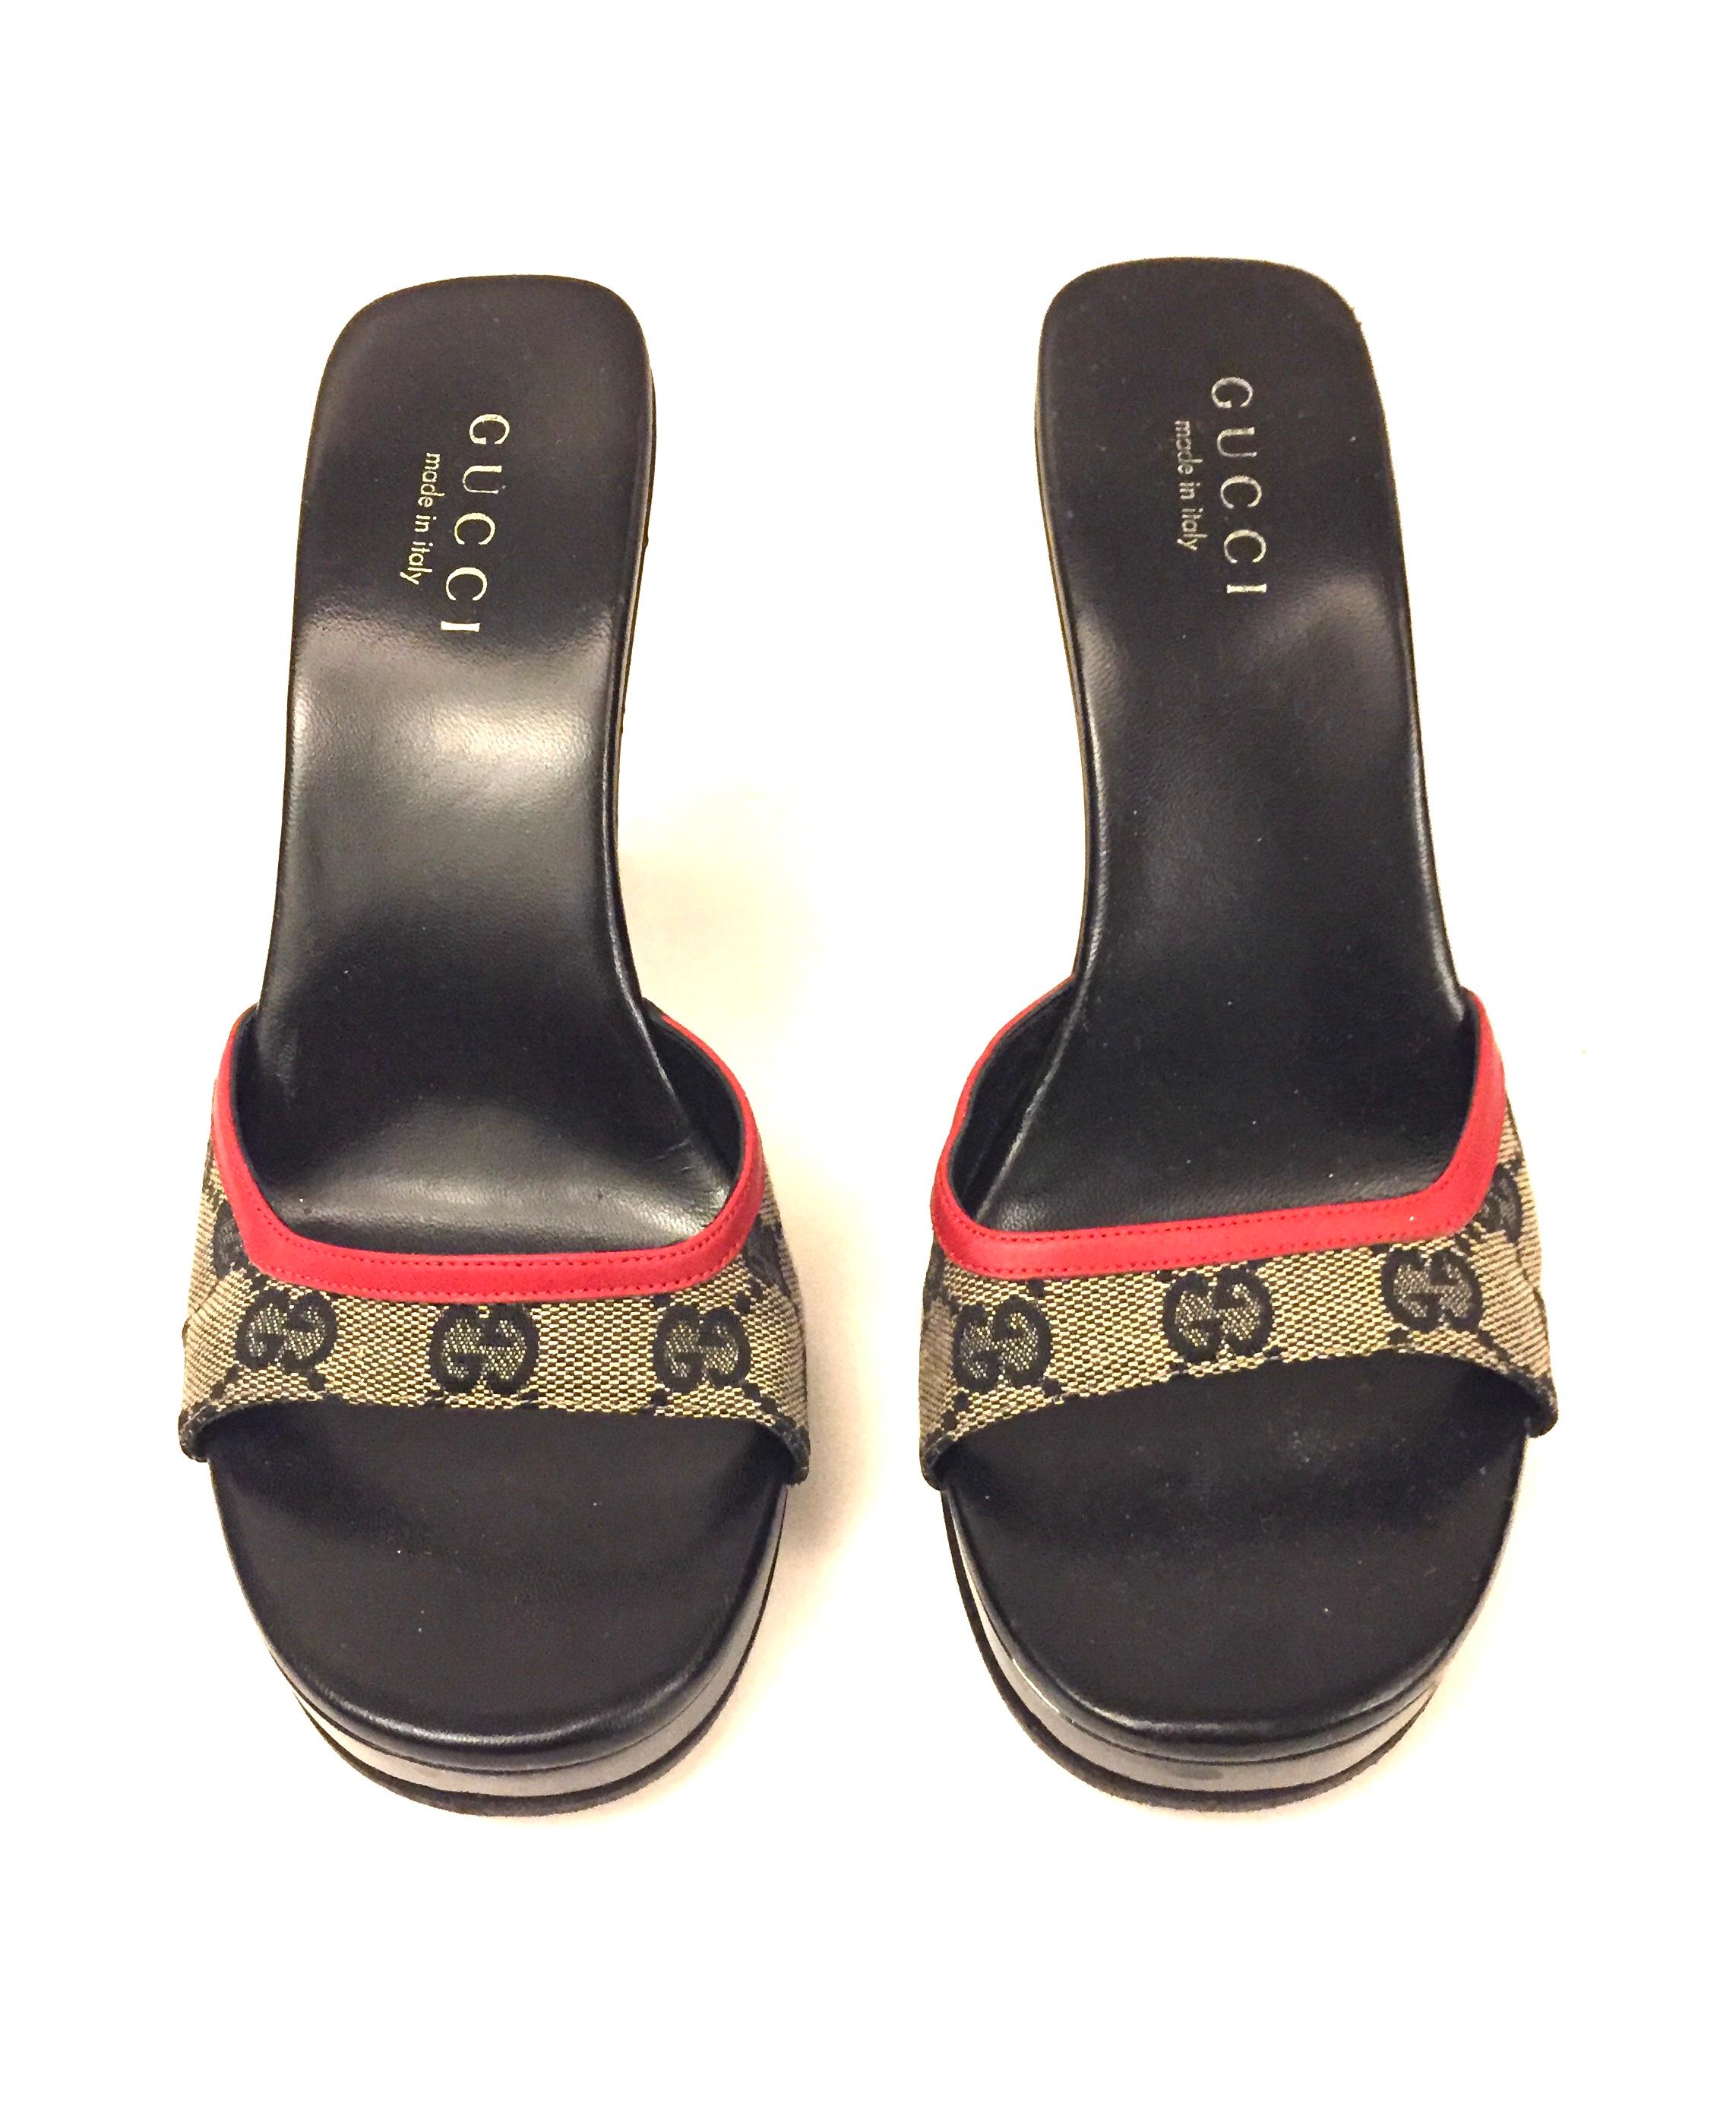 - Gucci monogram platform shoes with 

- Size 38.